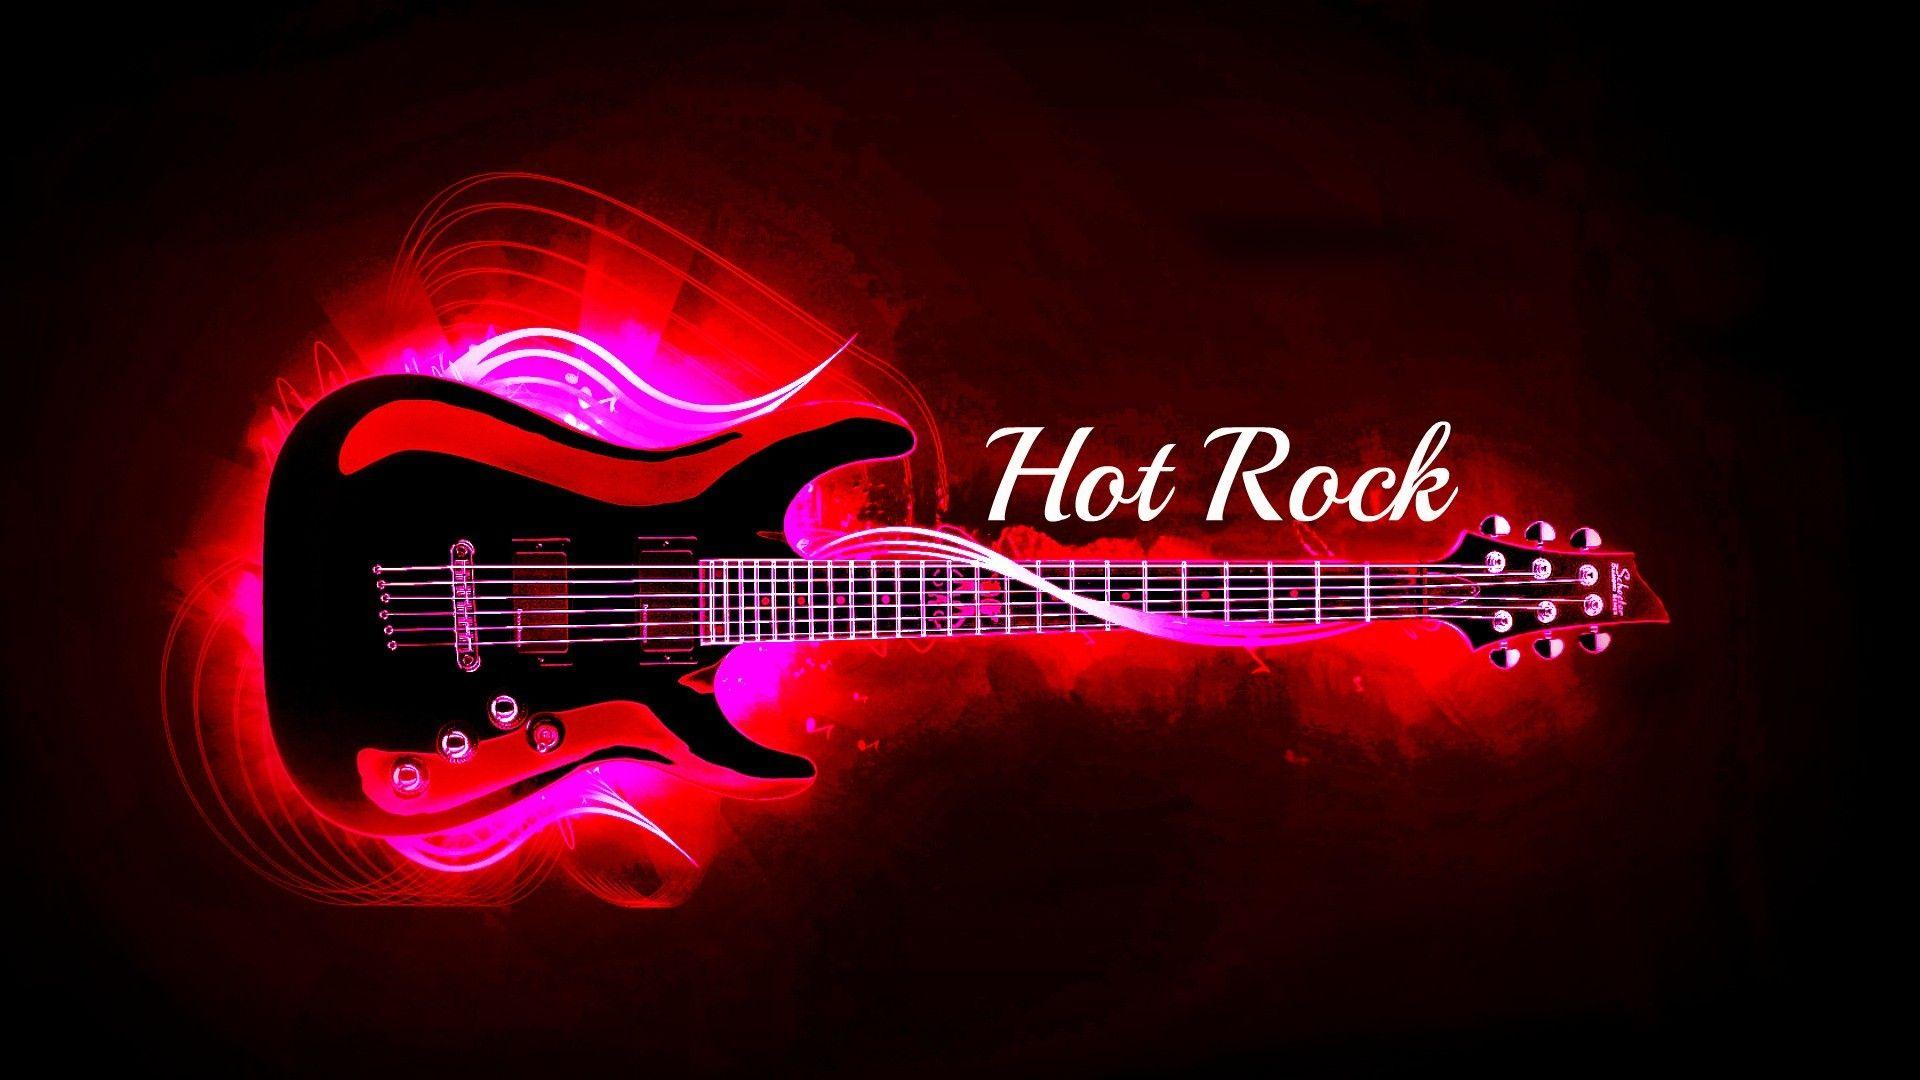 Hot rock guitar wallpaper. PC